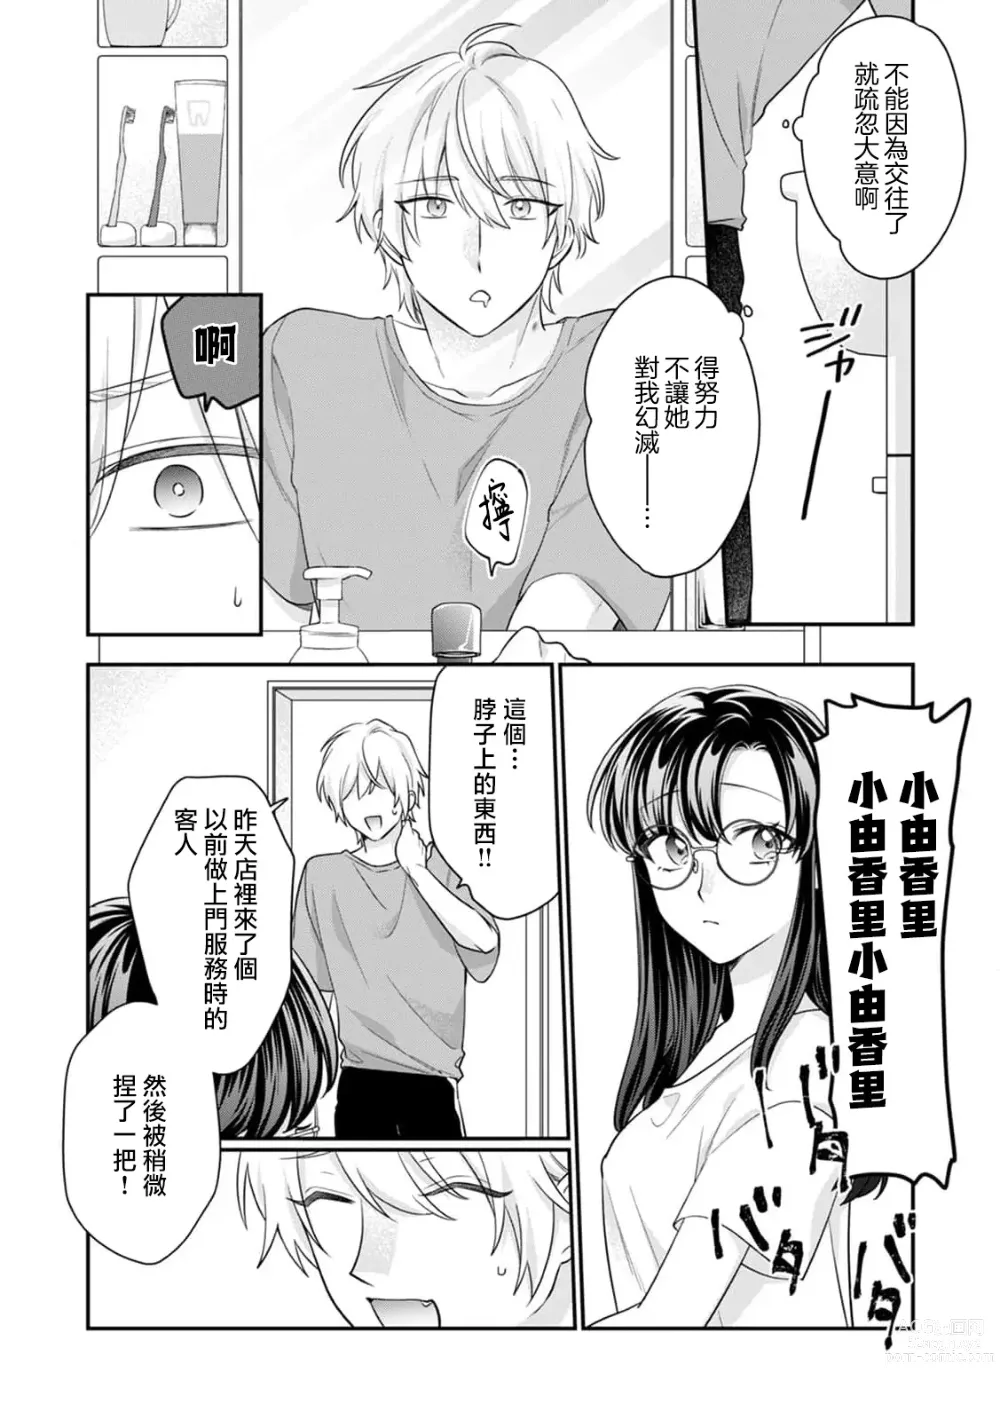 Page 5 of manga 用身体确认同居男友是否出轨…